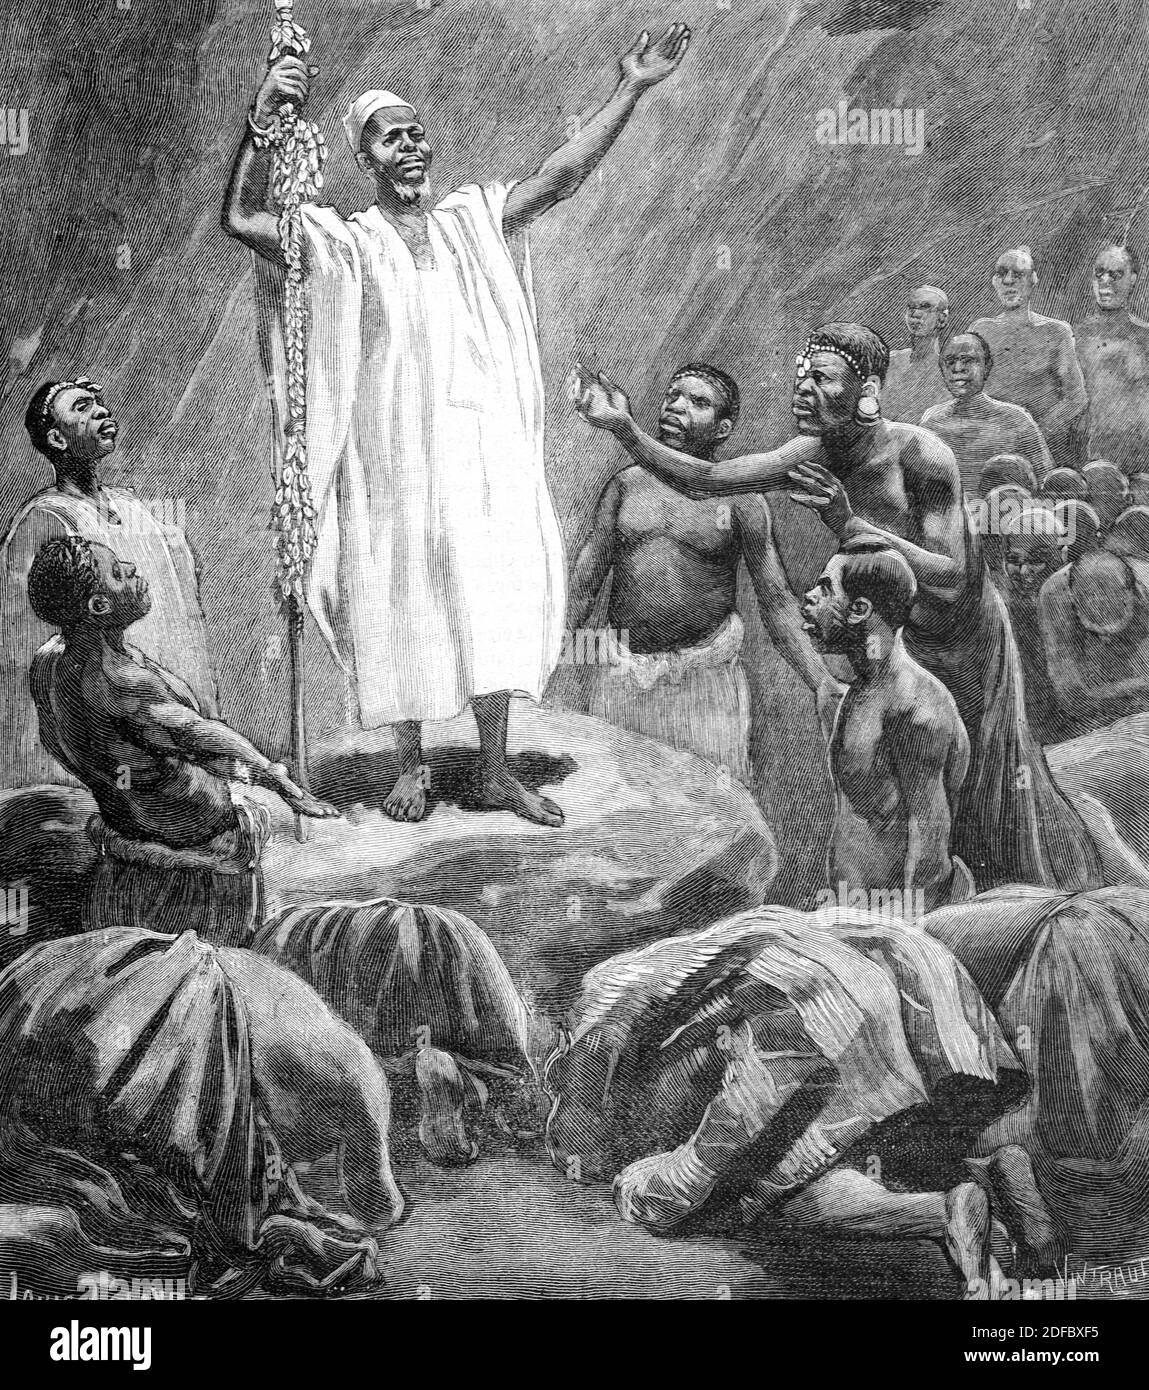 Heidnischer Priester Bubi Menschen Bioko Island Äquatorialguinea Zentralafrika (Engr 1895) Vintage Illustration oder Gravur Stockfoto